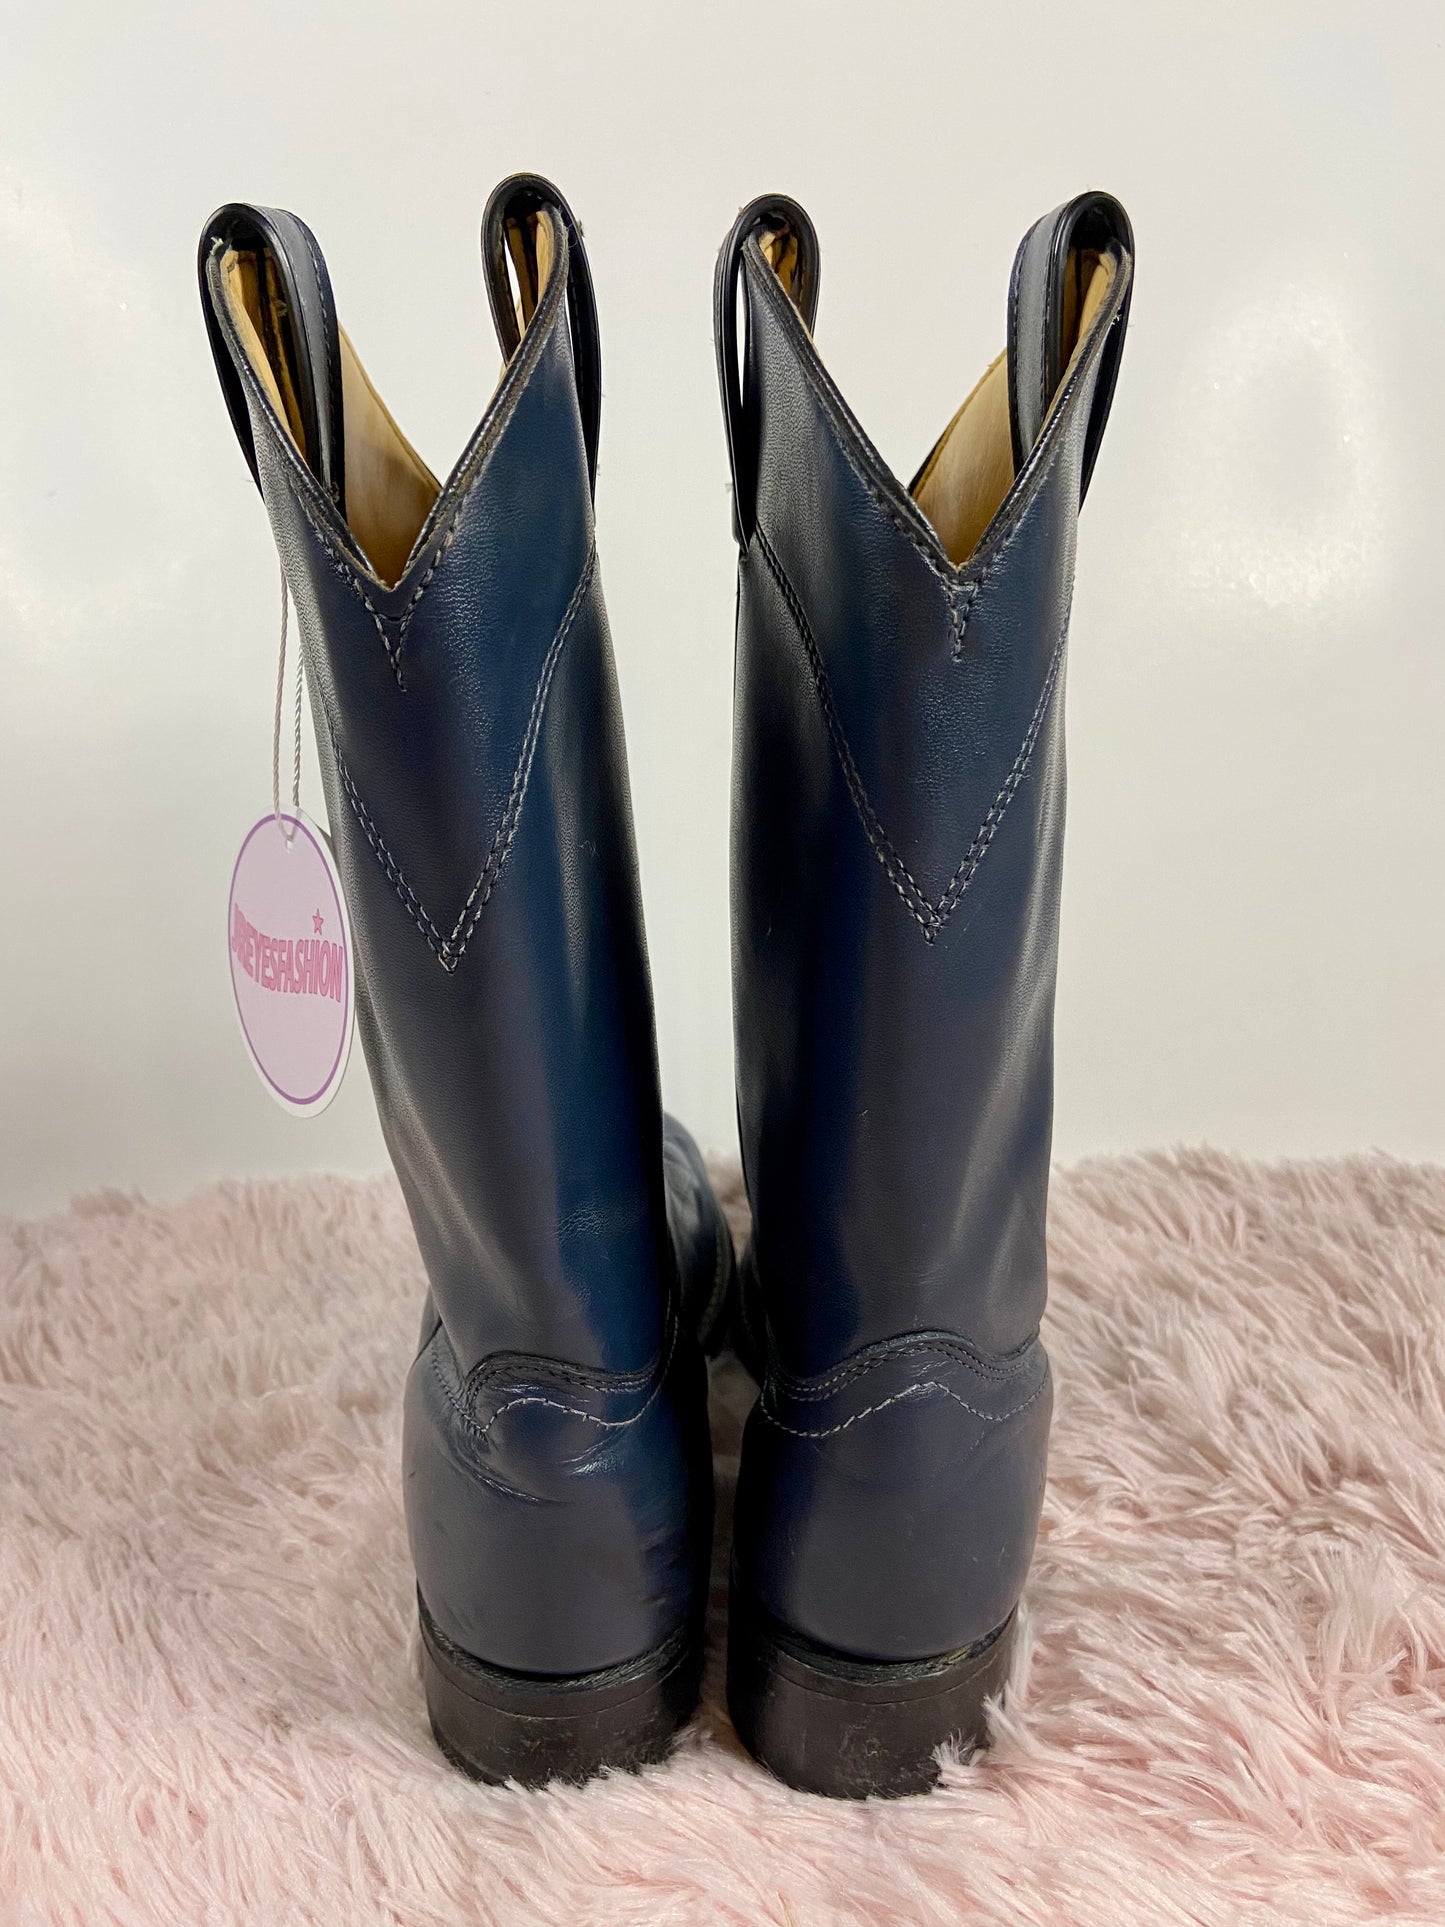 Blue Cowboy Boots - 5.5